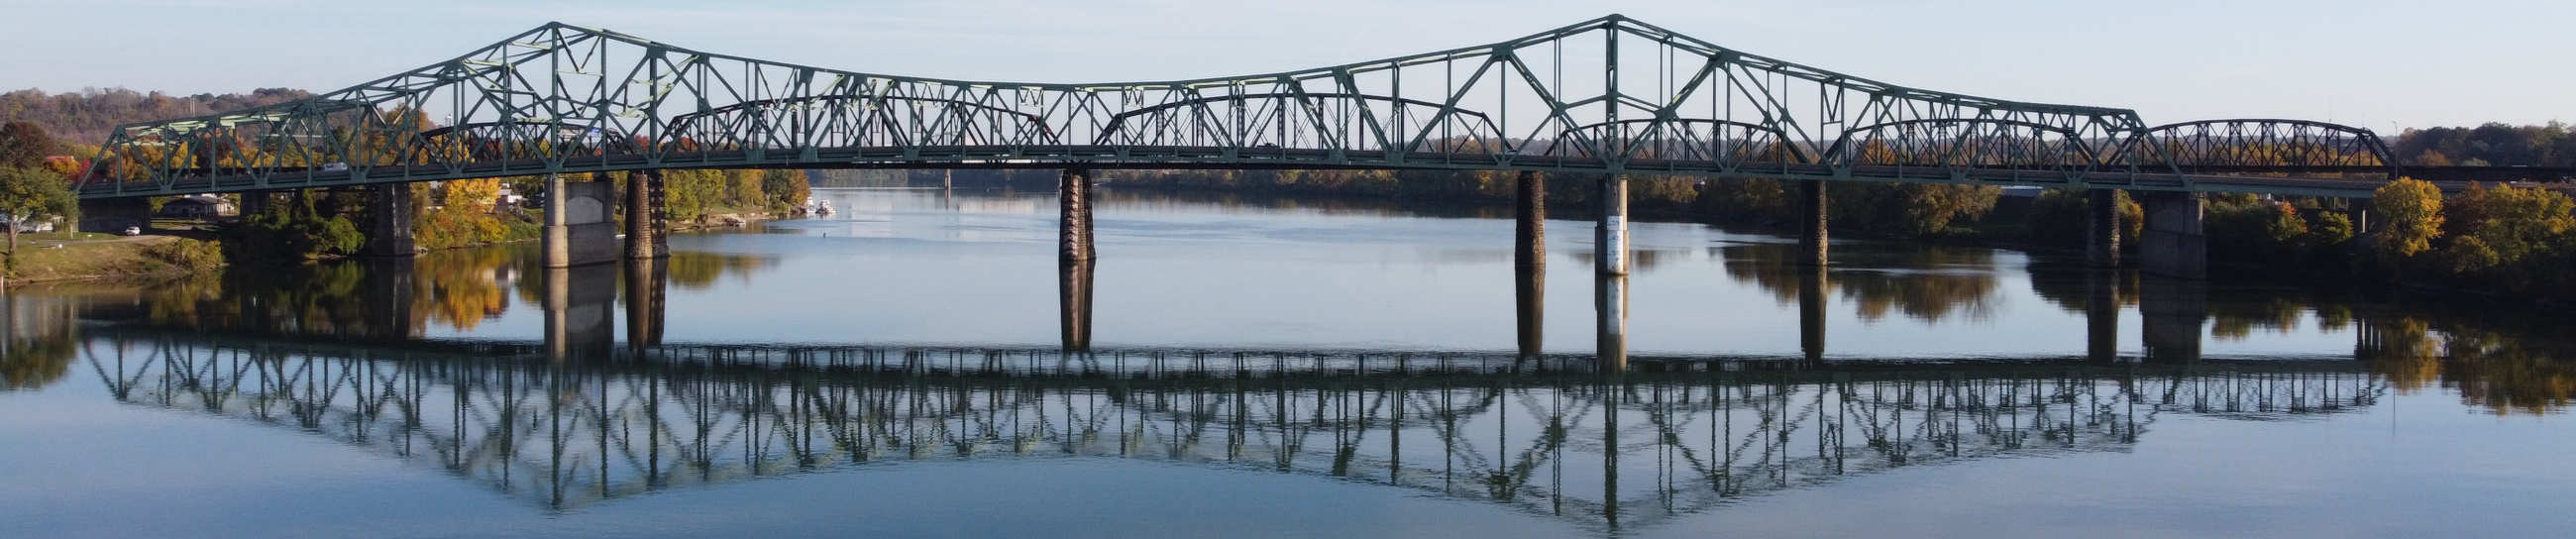 Belpre bridge connecting Belpre, Ohio with downtown Parkersburg, West Virginia -- blue skies and bridge reflection on river water below